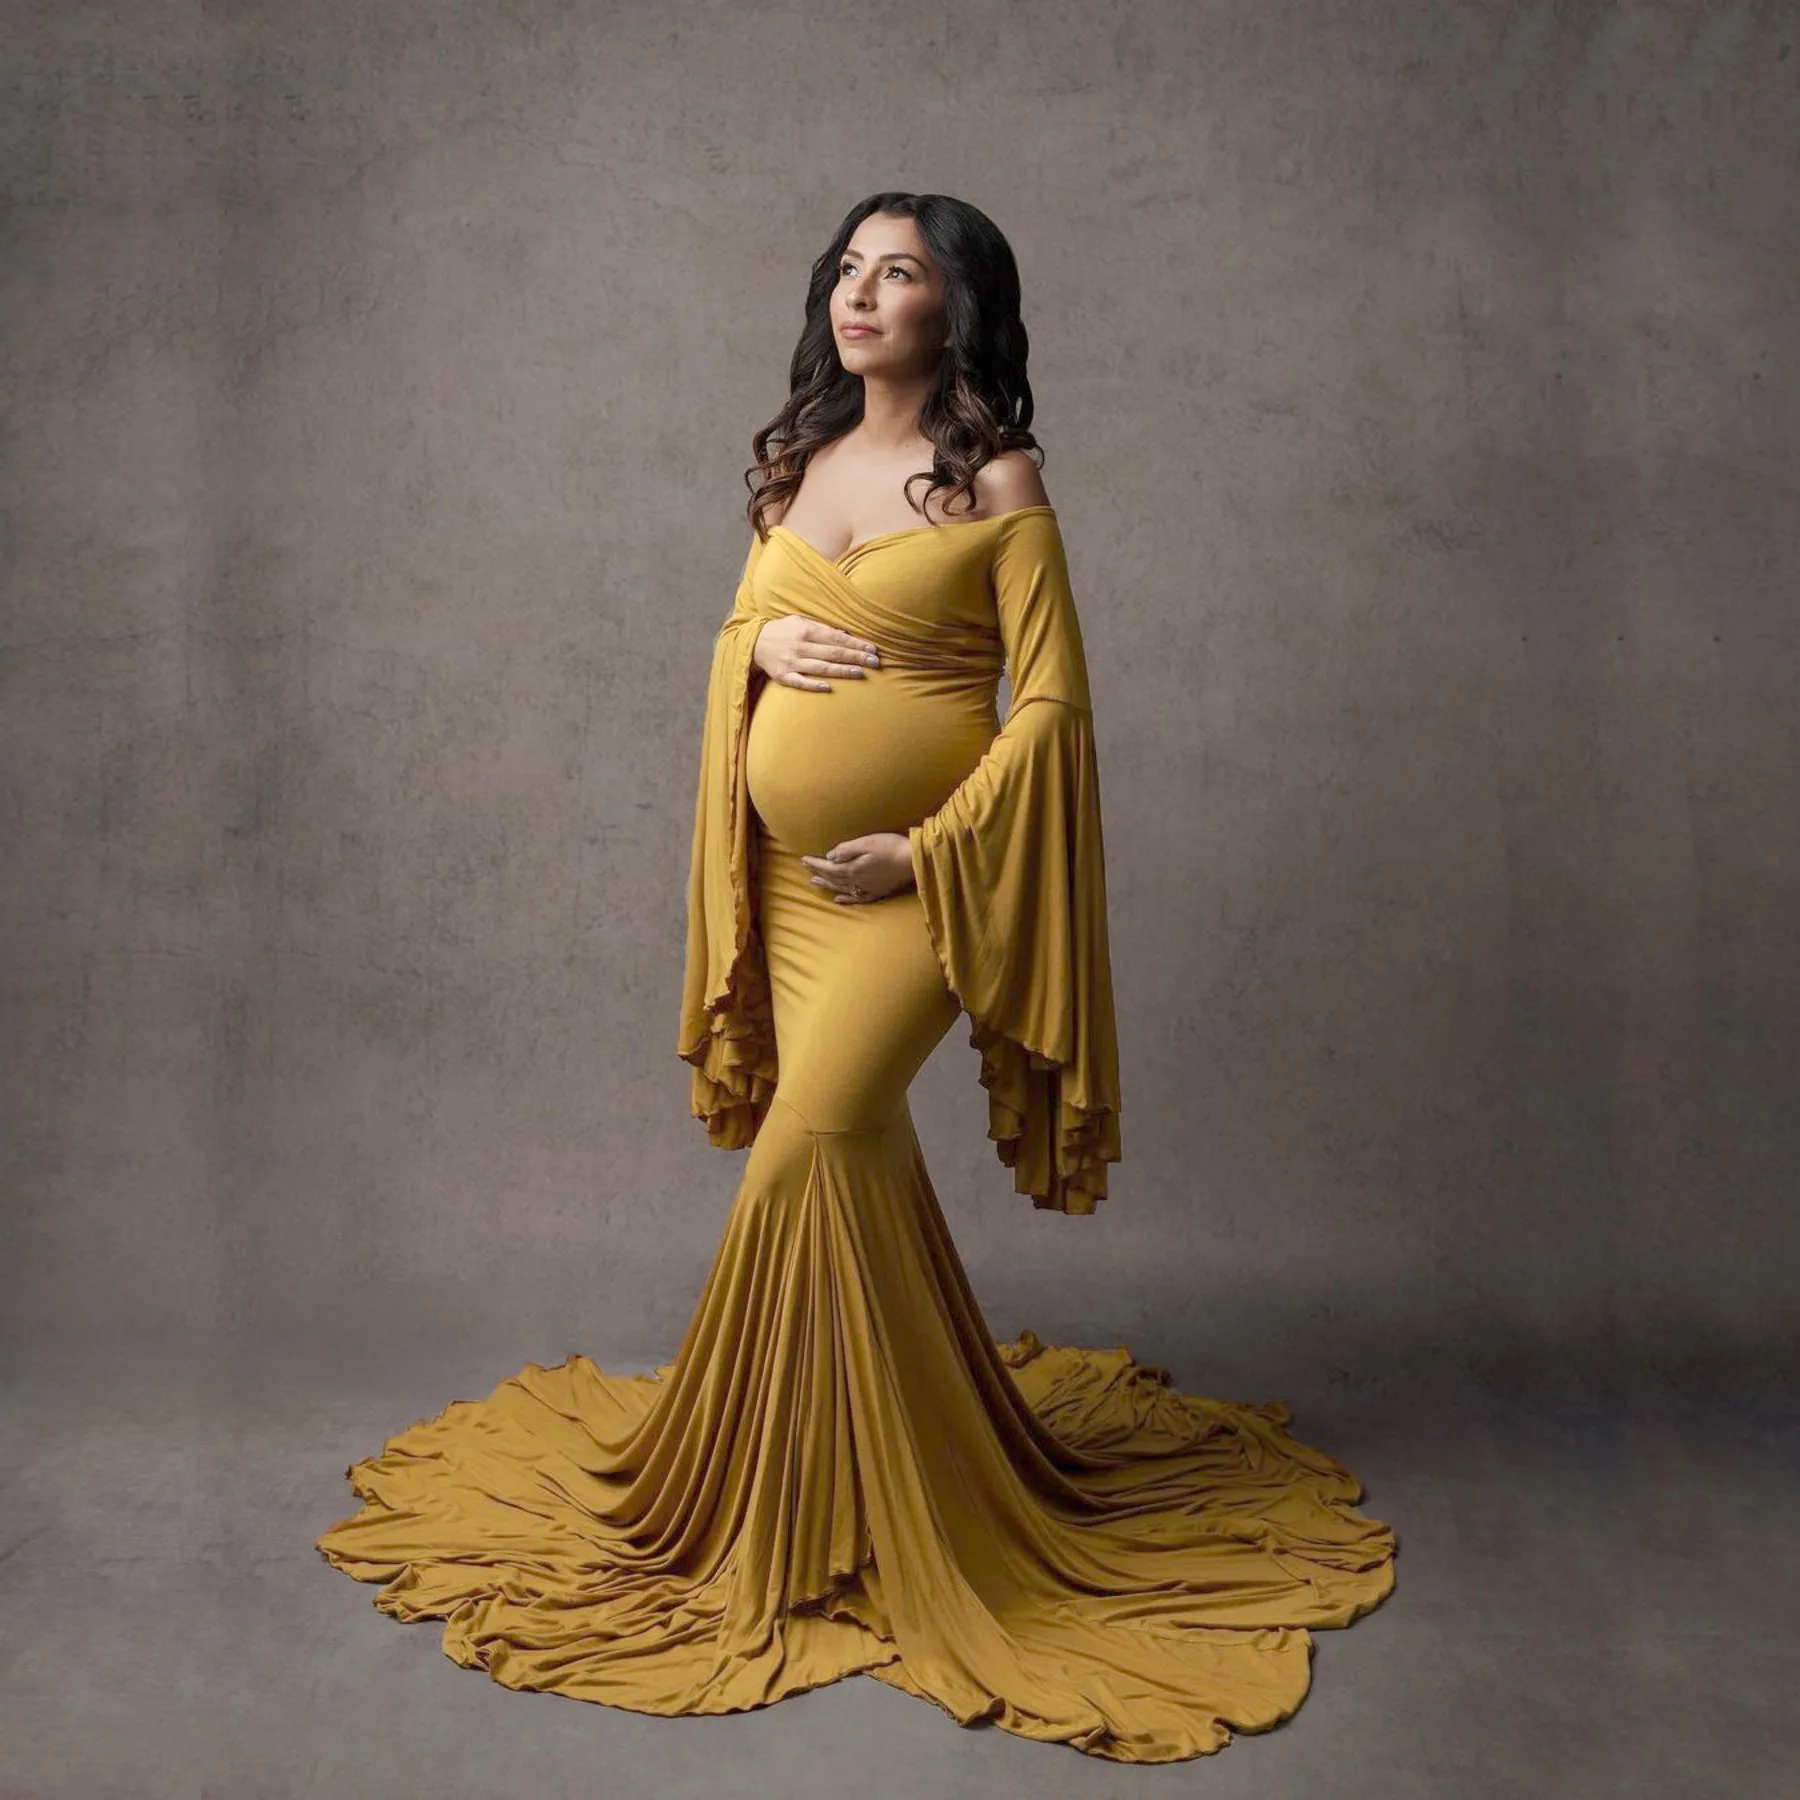 2021 Pregnancy Photo Shooting Dress Baby Shower  for Women Pregnant  Cotton Ruffle Sleeve V-neck Fishtail Skirt Red Blue Pink enlarge